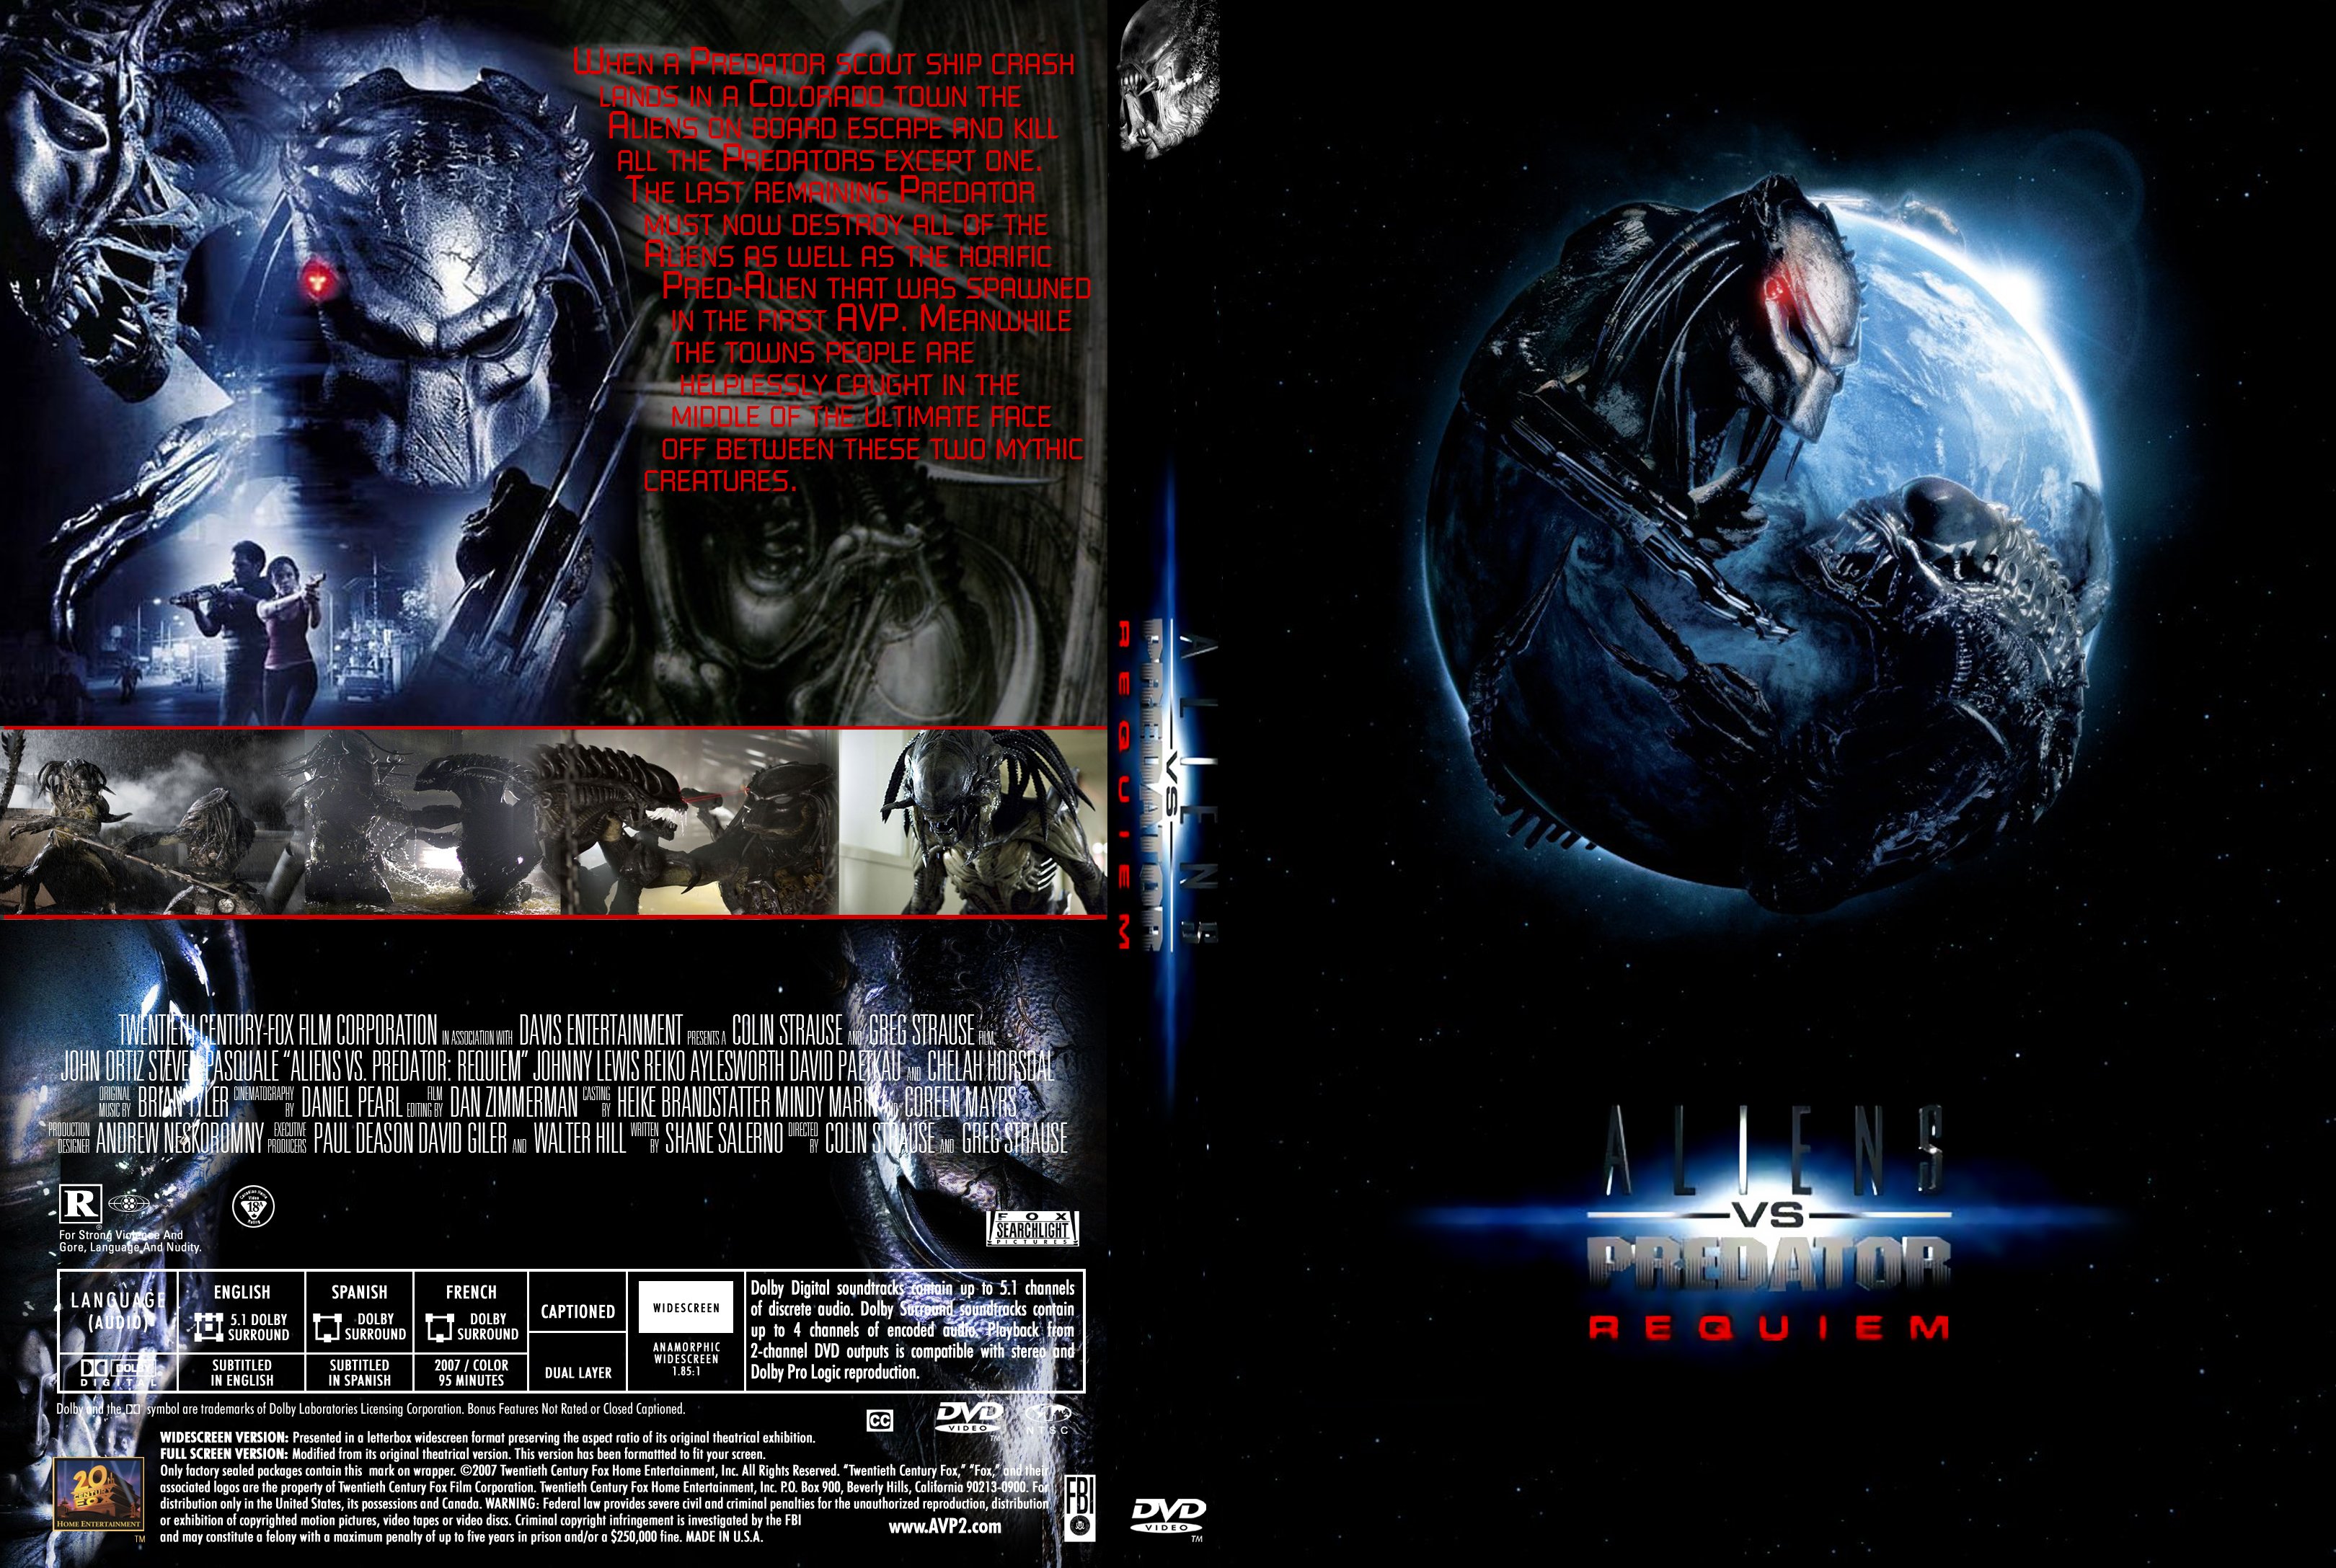 download alien vs predator requiem blu ray